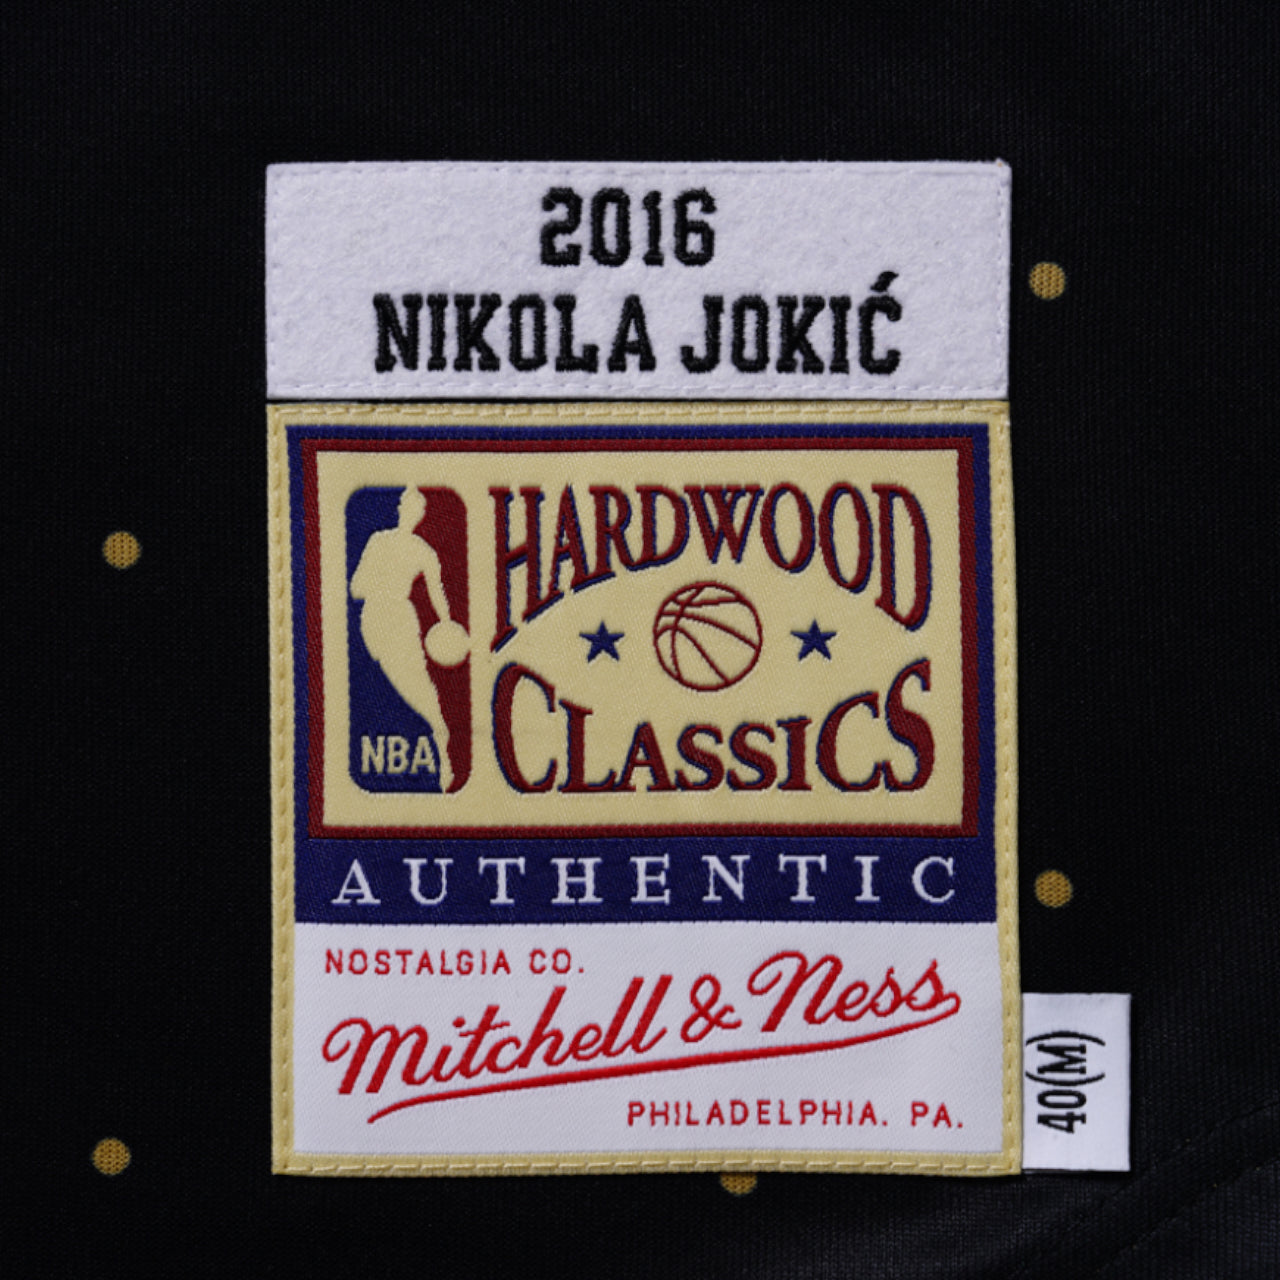 Nikola Jokic "Team World" 2016 NBA Raising Star Game Mitchell & Ness Authentic Jersey - Gold/Black